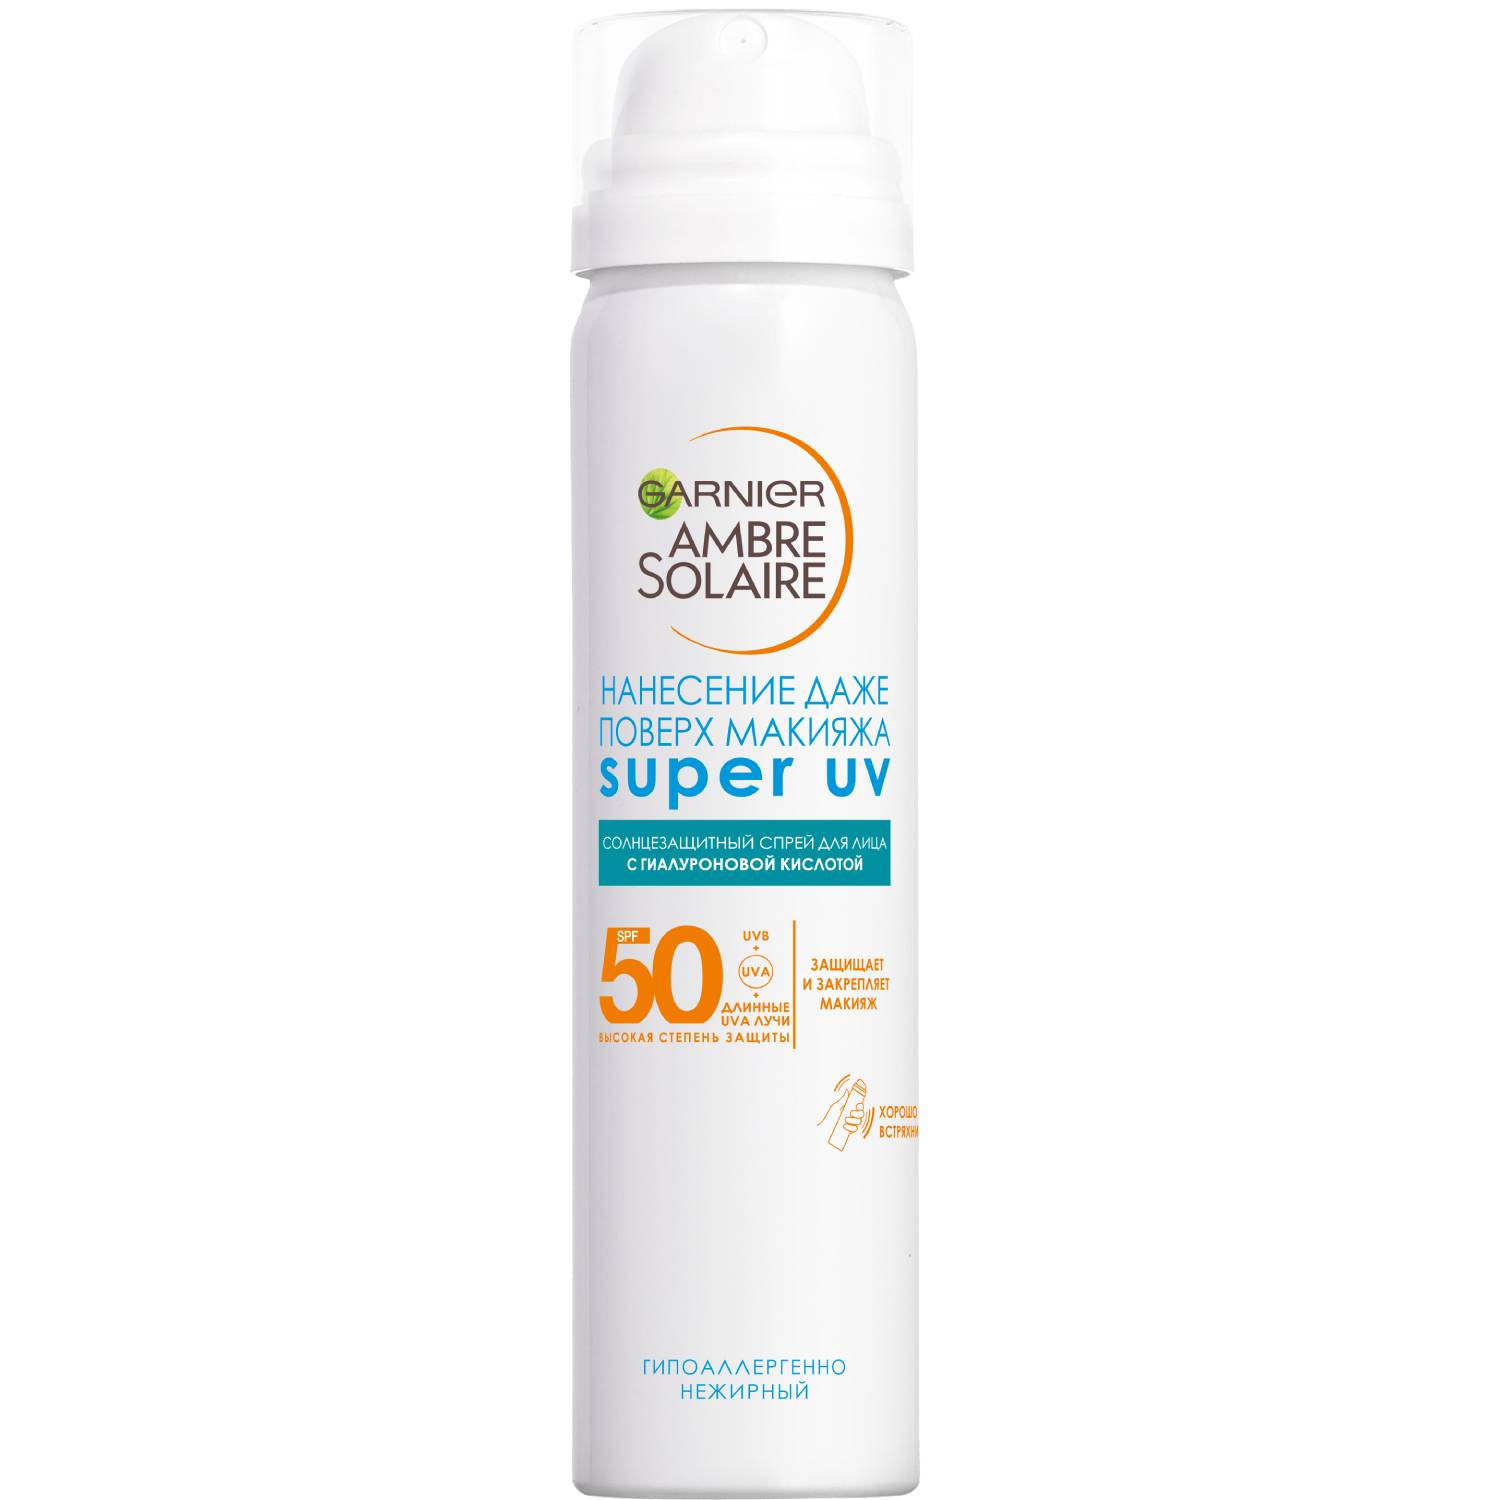 Garnier Солнцезащитный увлажняющий сухой спрей для лица Super UV SPF50, 75 мл (Garnier, Amber solaire)